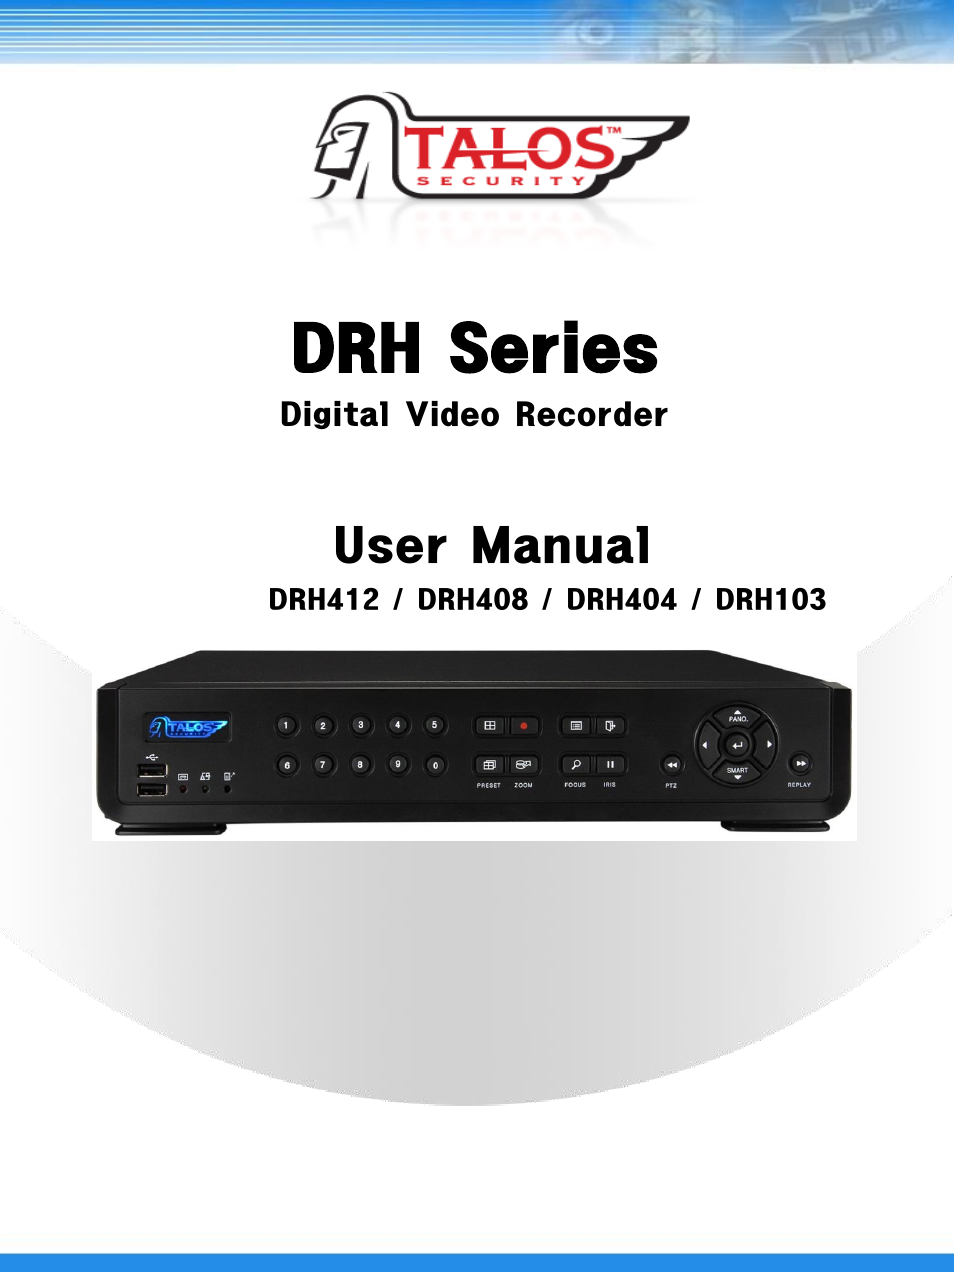 DRH404 Hybrid DVR Manual